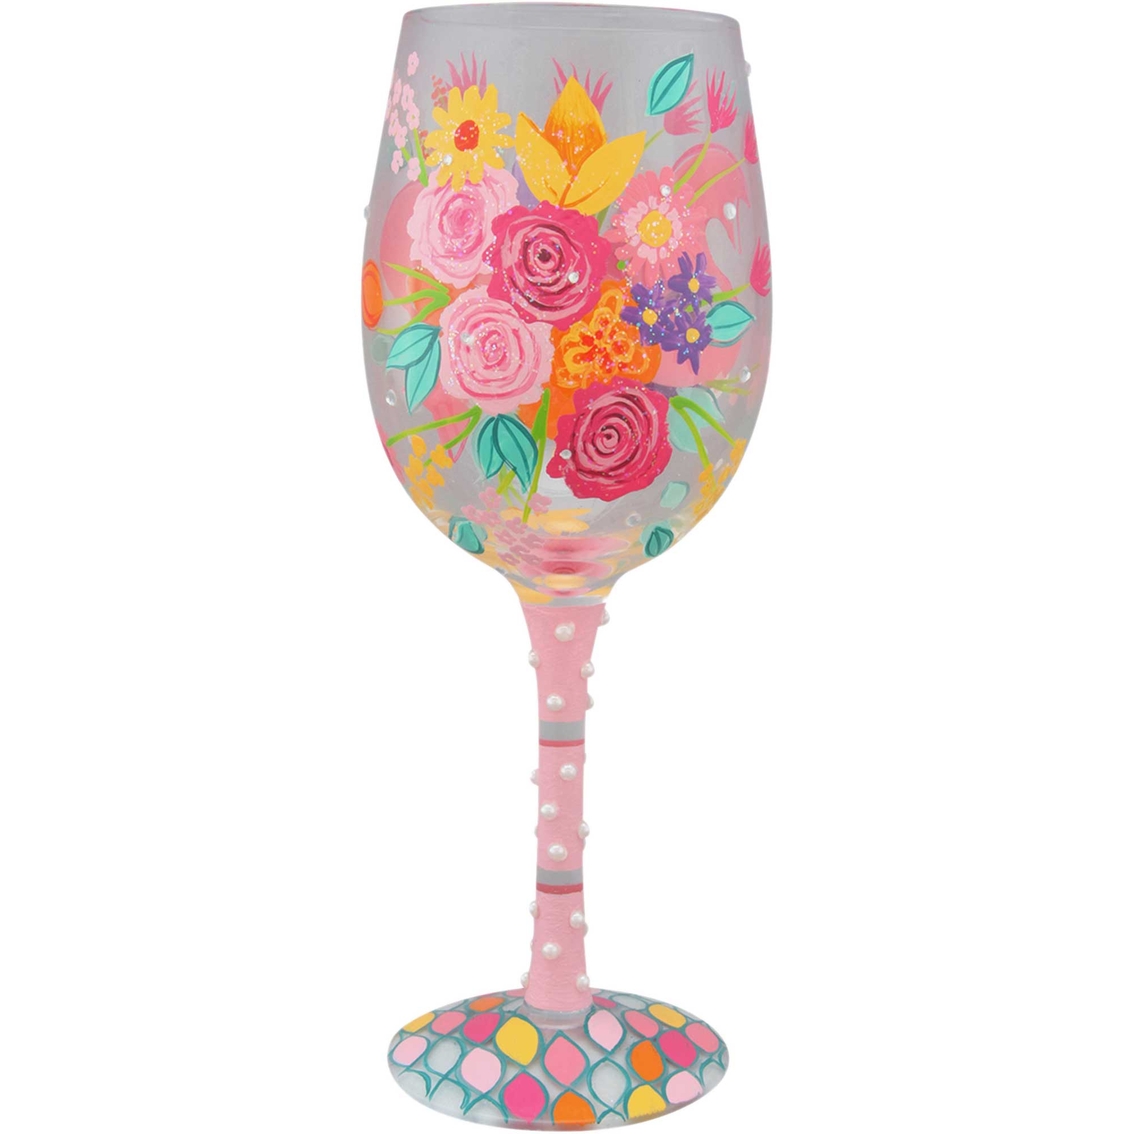 Lolita Glad You're My Mom Wine Glass - Image 2 of 2